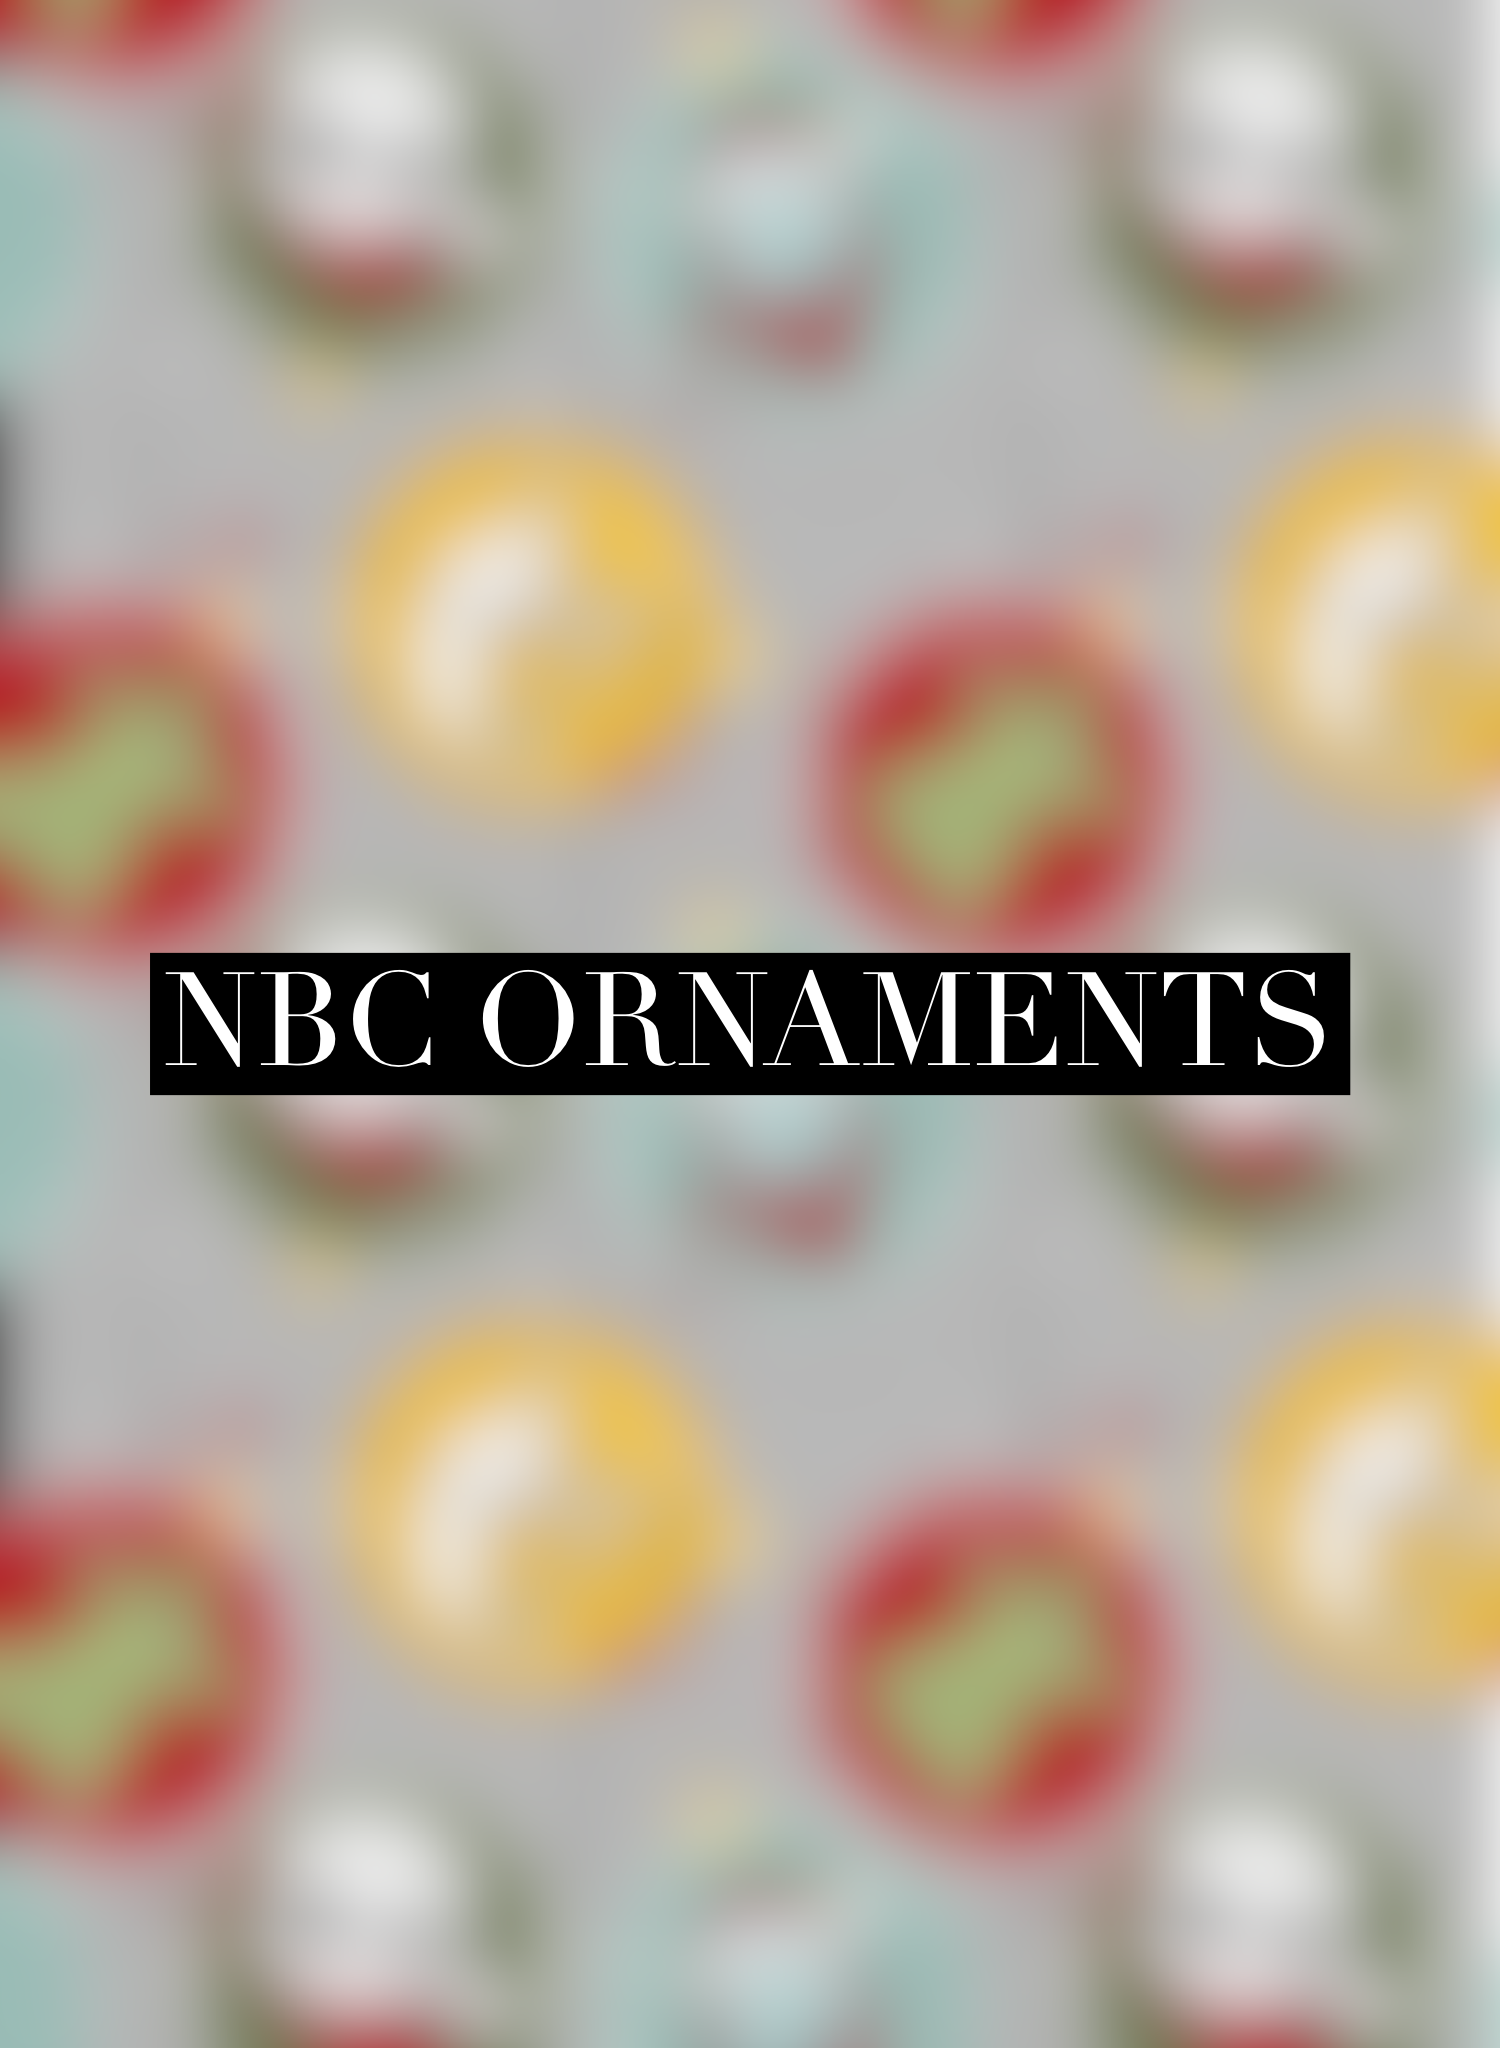 N.B.C ornaments seamless